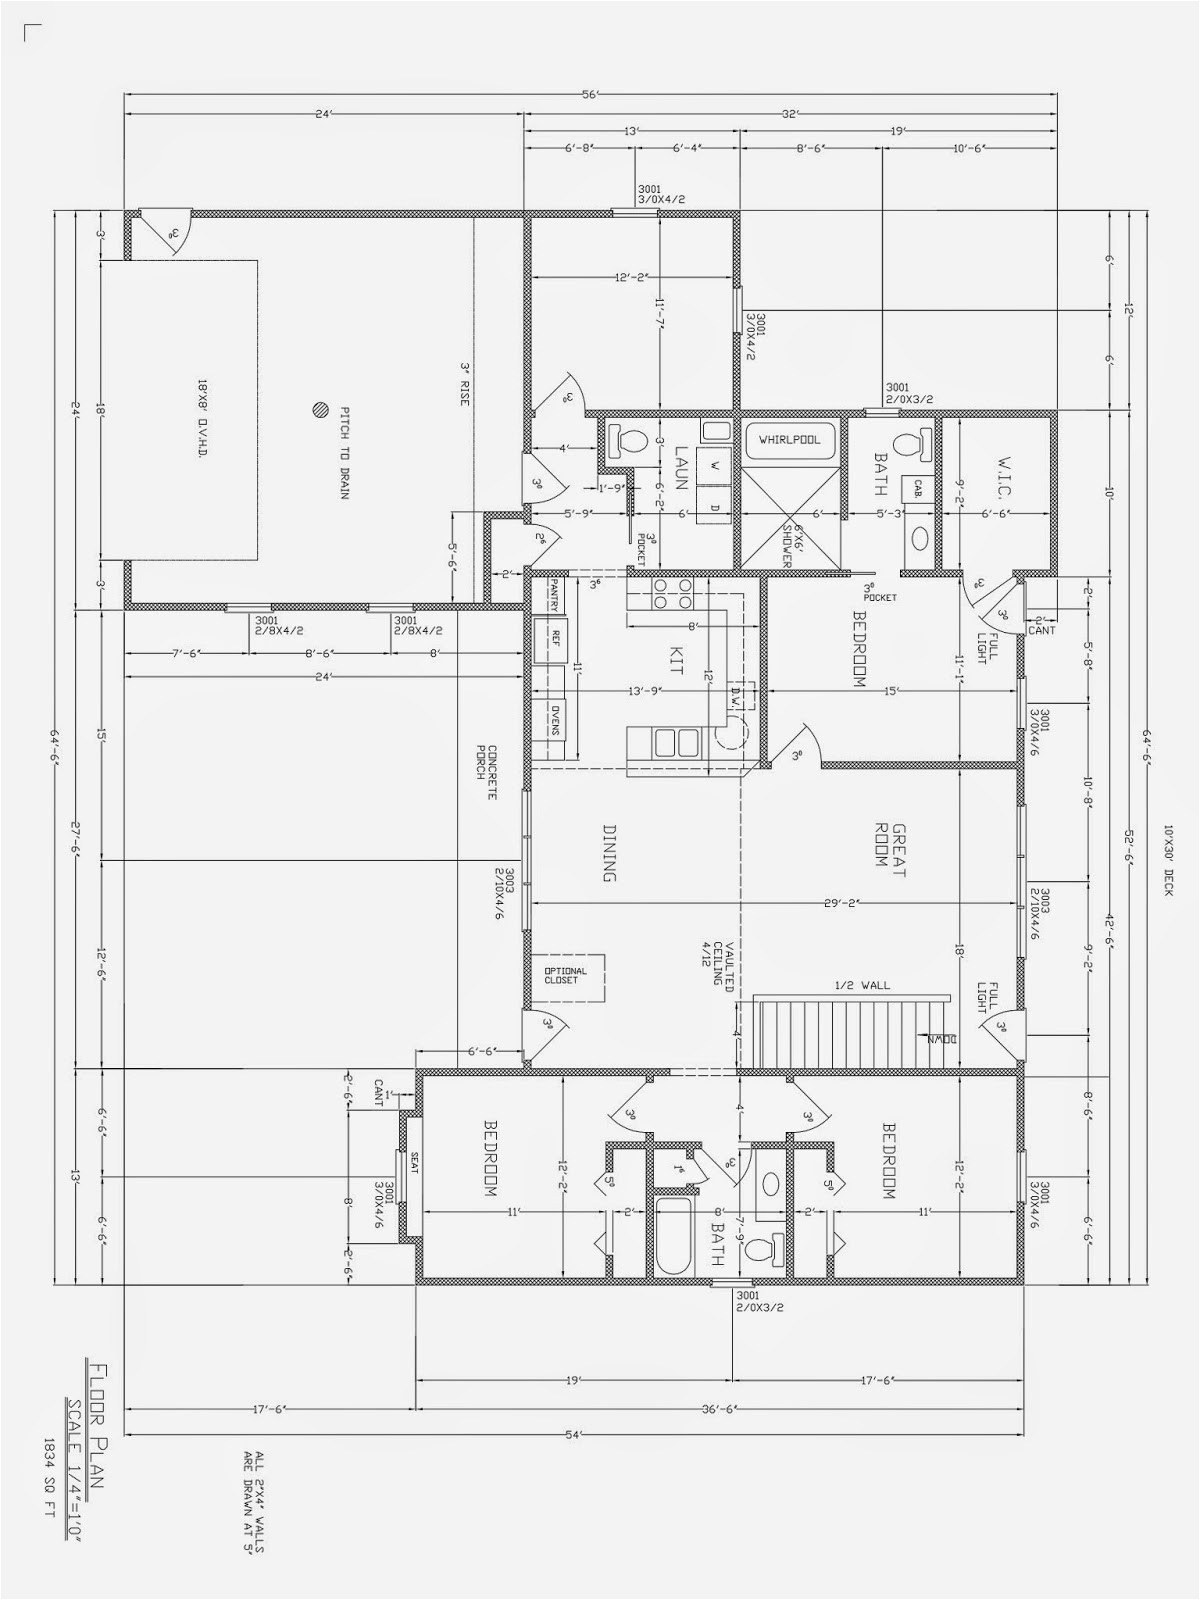 Ada Bathroom Design New Ada House Plans Luxury Unique Floor Plan Elegant 0d All About